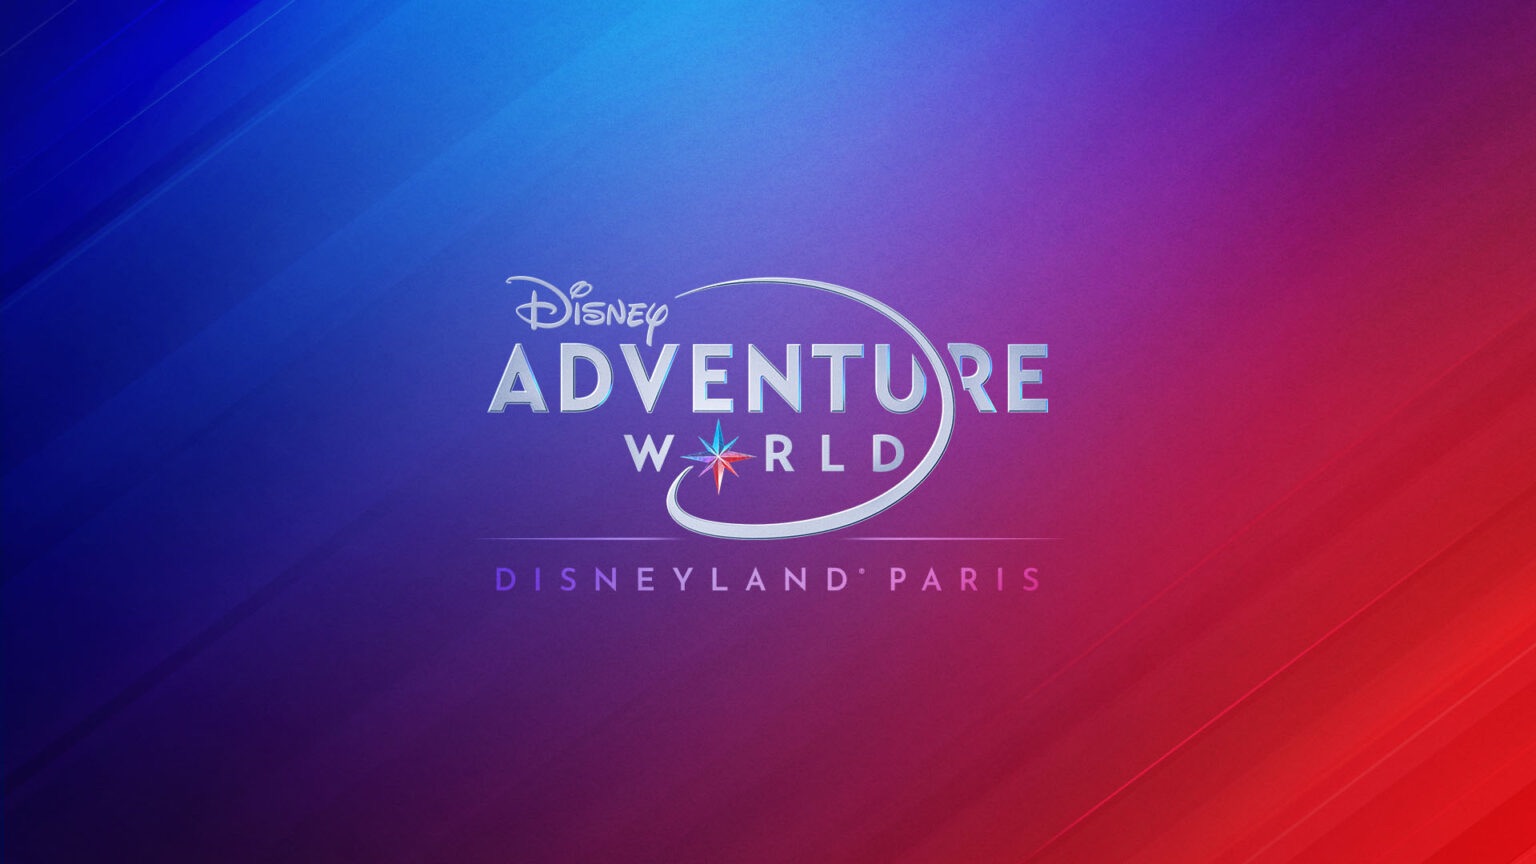 Walt Disney Studios Park to Be Reimagined to Disney Adventure World